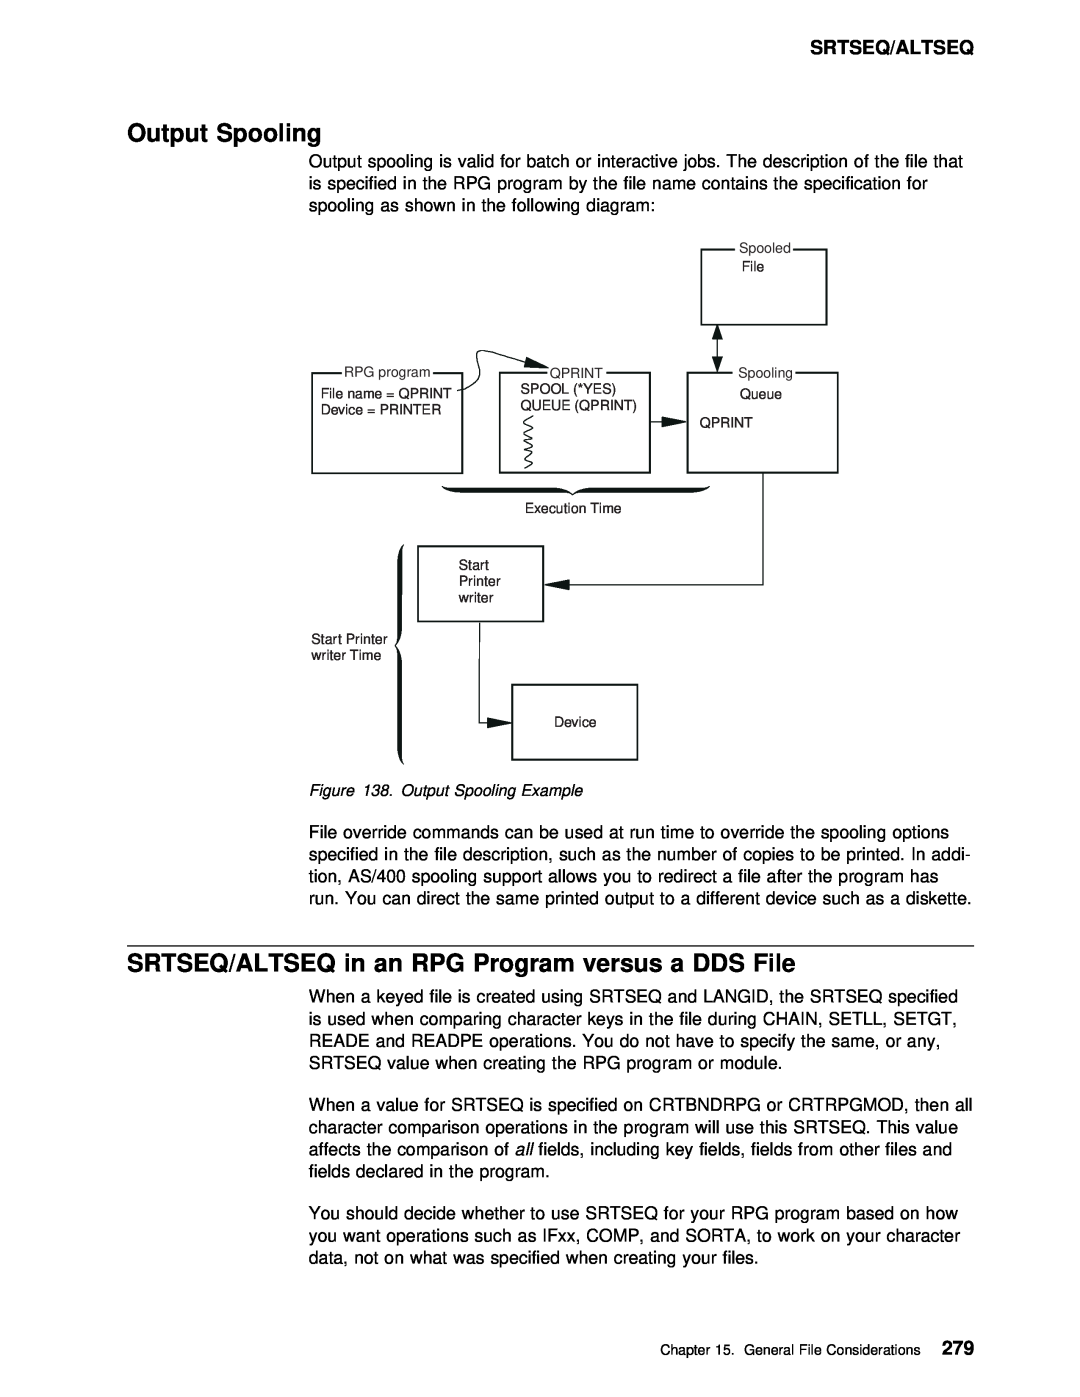 IBM AS/400 manual Output Spooling, Srtseq/Altseq, SRTSEQ/ALTSEQ in an, File 